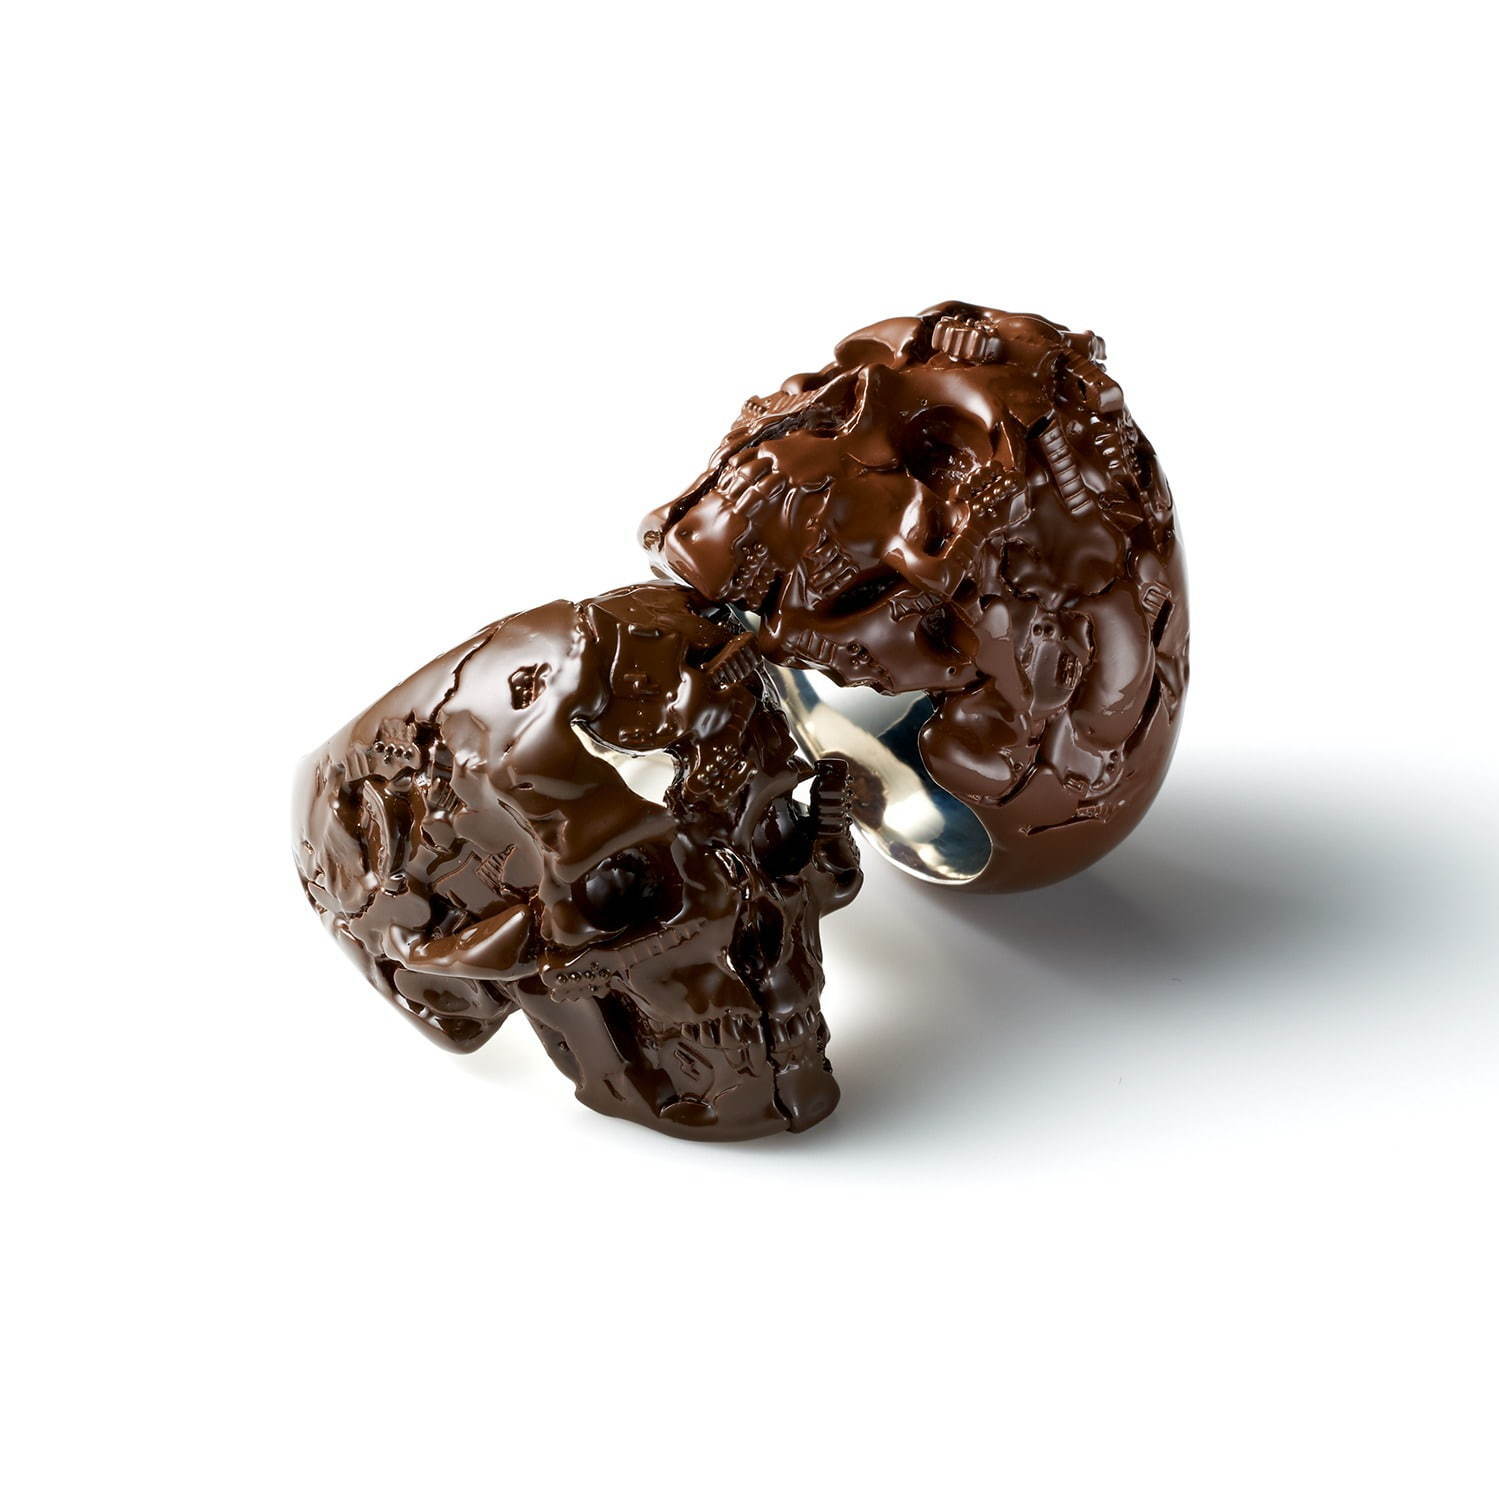 “CHOCOLATE SKULL”Ring 13,15,17,19,21,23号 各69,000円＜限定アイテム＞
SILVER+PAINT(BITTER,MILK)